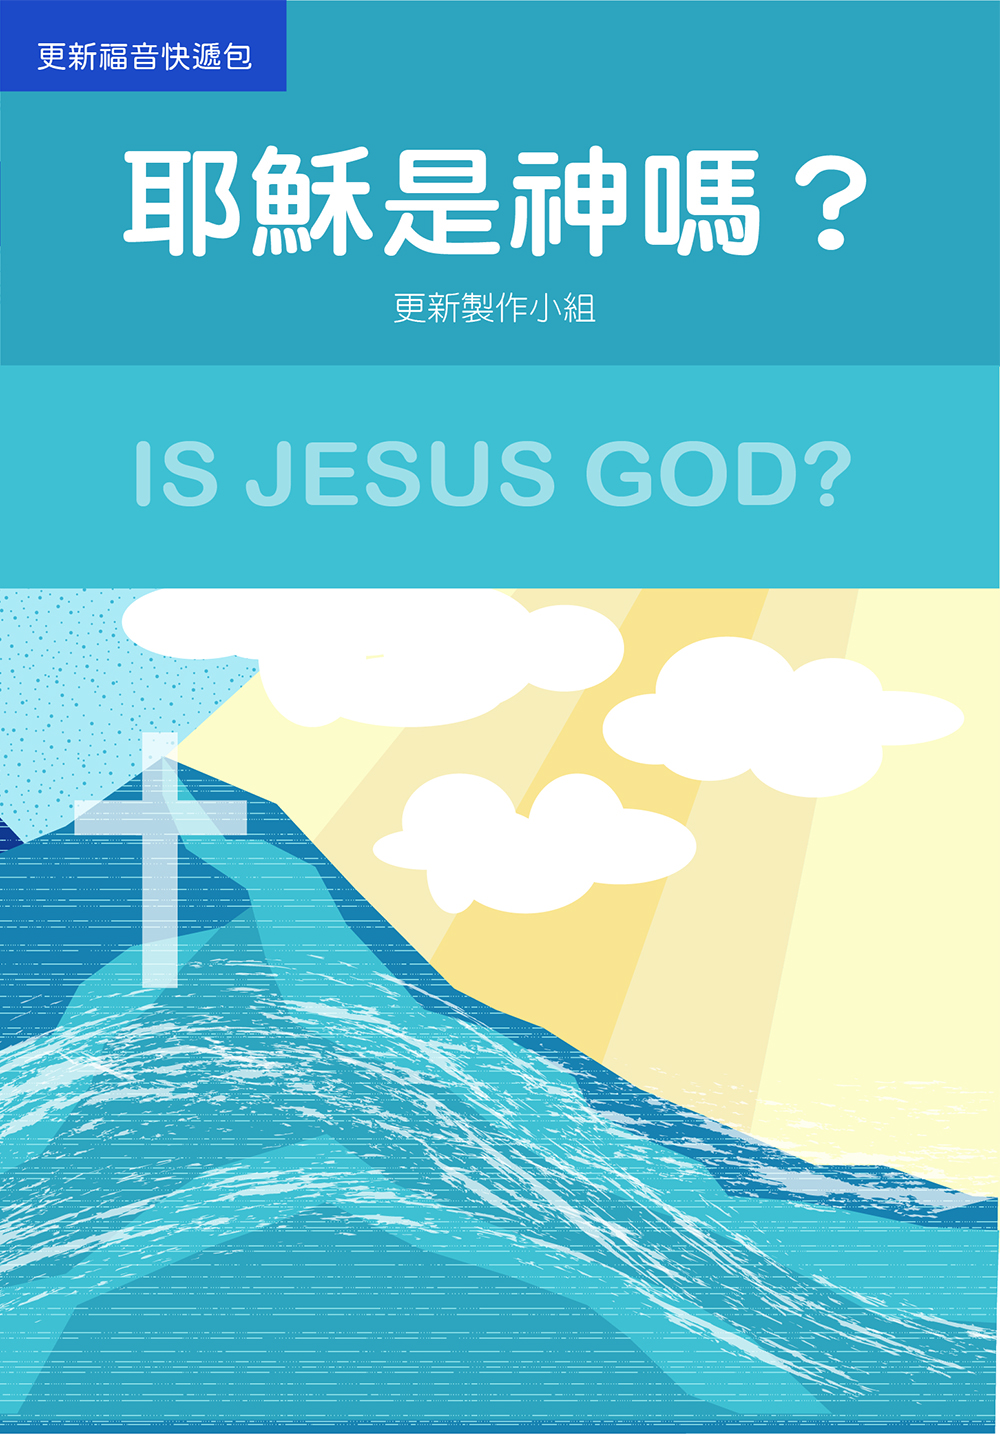 A4-03 CqOܡH(c) IS JESUS GODH